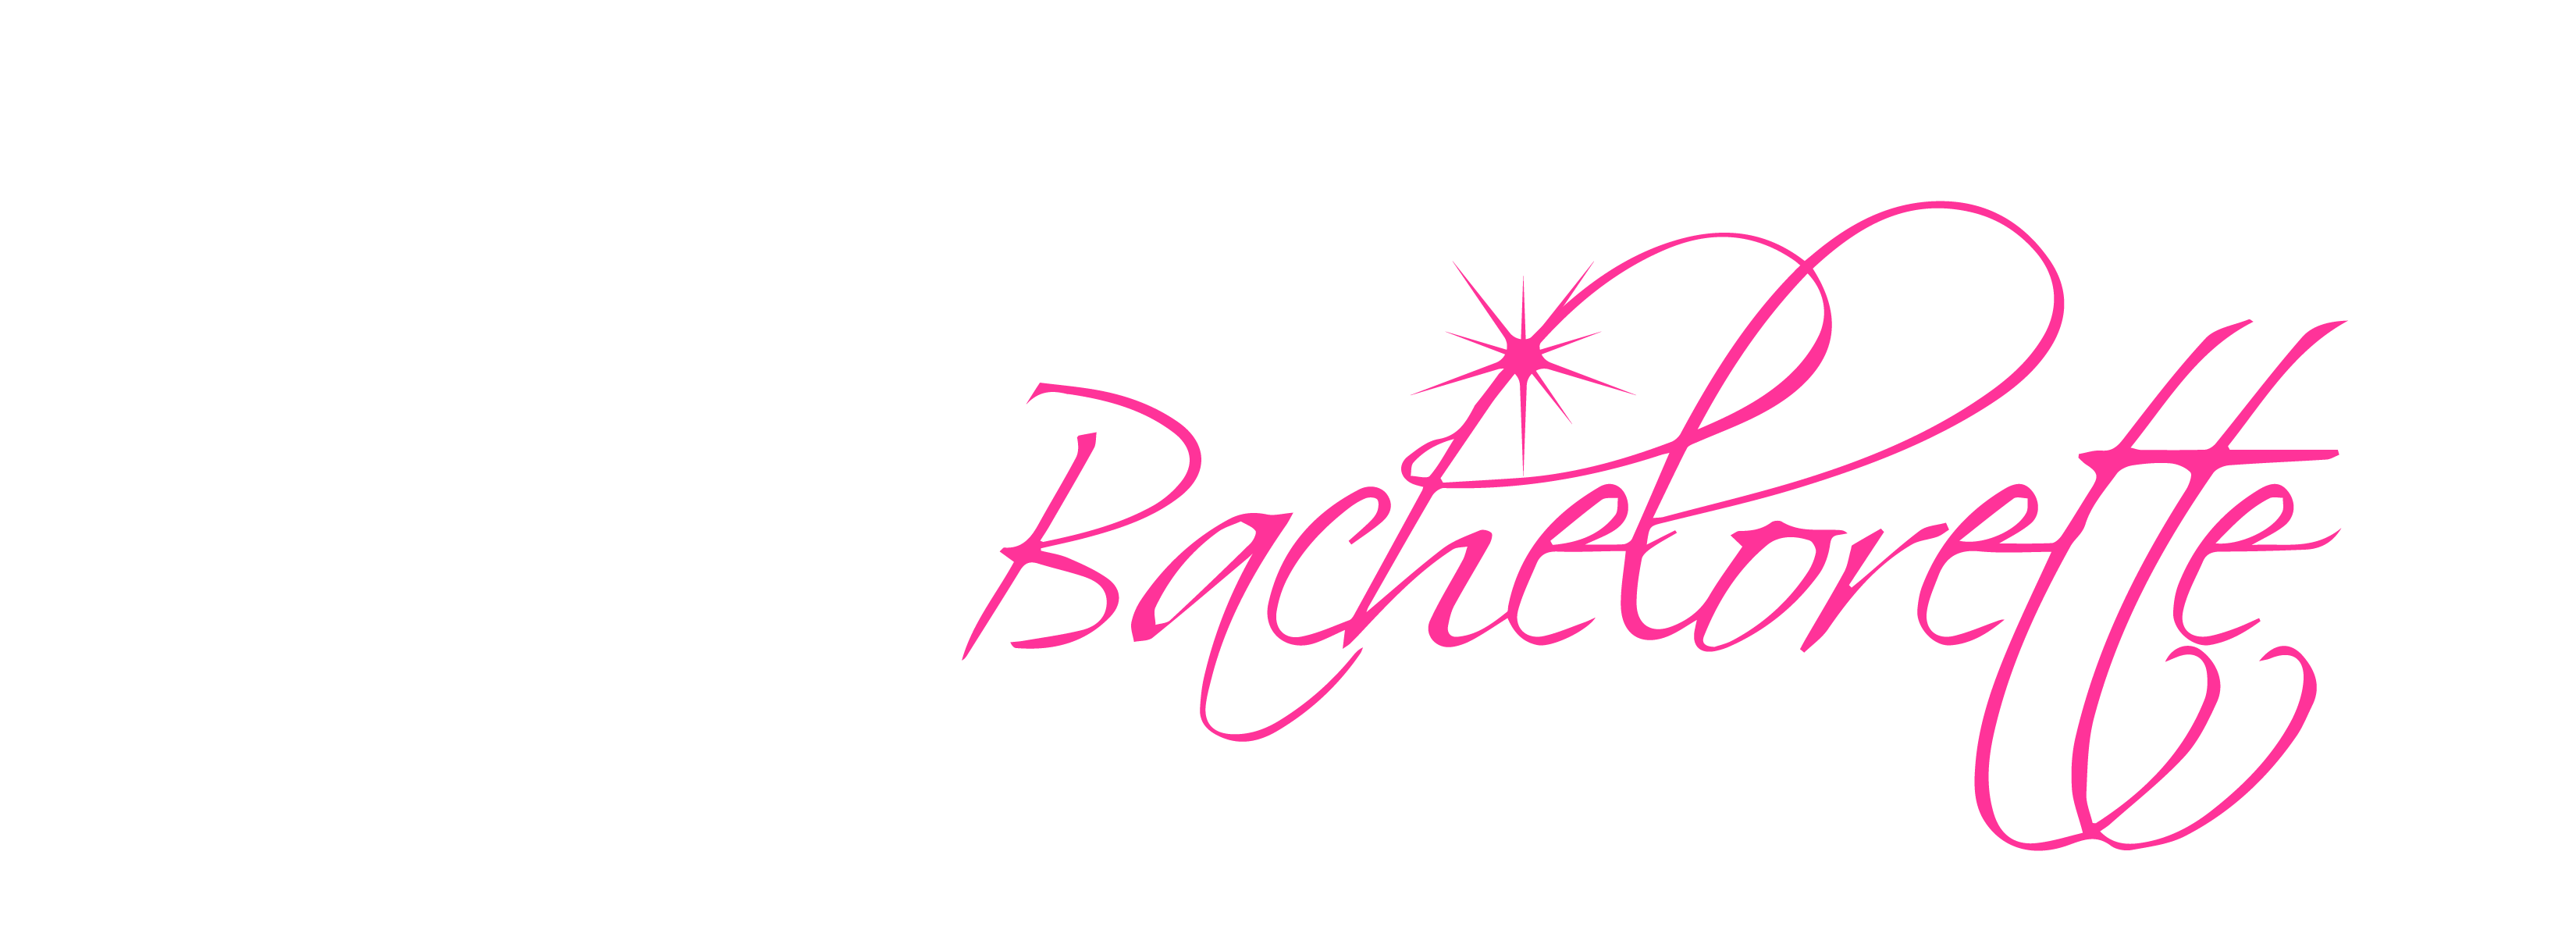 VIP Bachelorette | Chicago Bachelorette Party Planners